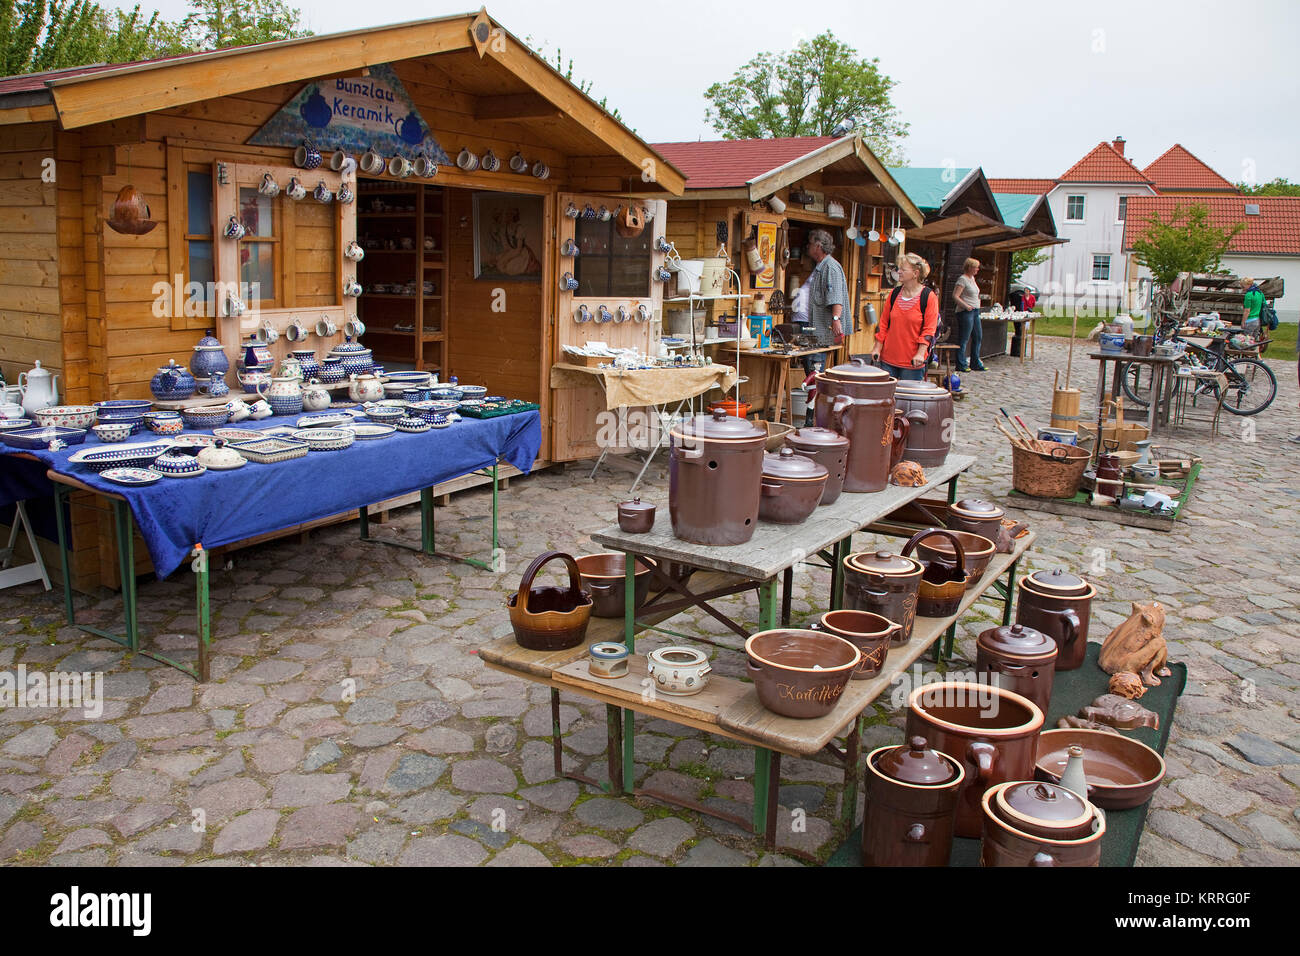 Handcraft market at Putgarten, Cape Arkona, North cape, Ruegen island, Mecklenburg-Western Pomerania, Baltic Sea, Germany, Europe Stock Photo